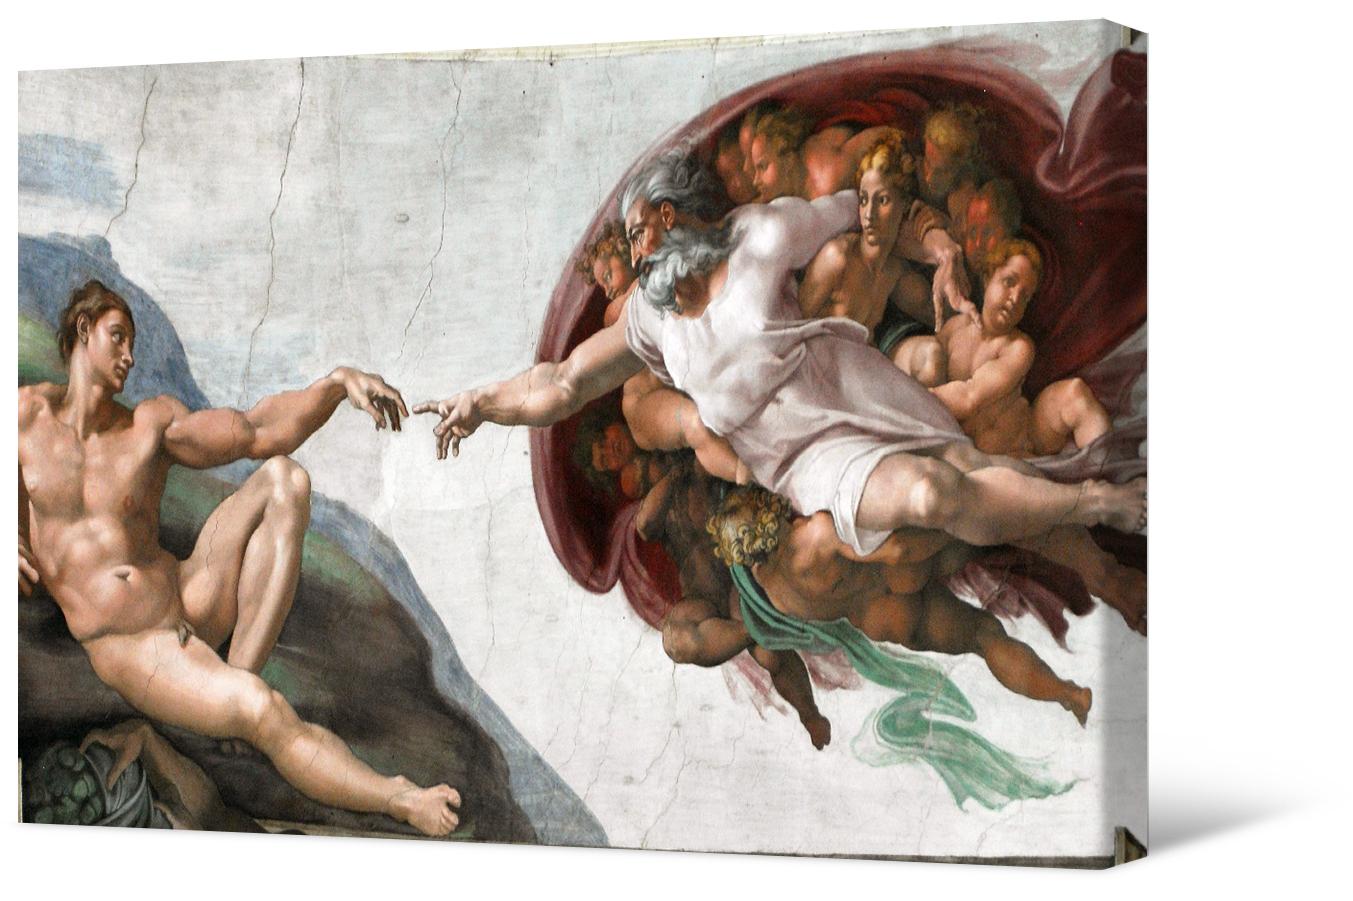 Michelangelo - Creation of Adam